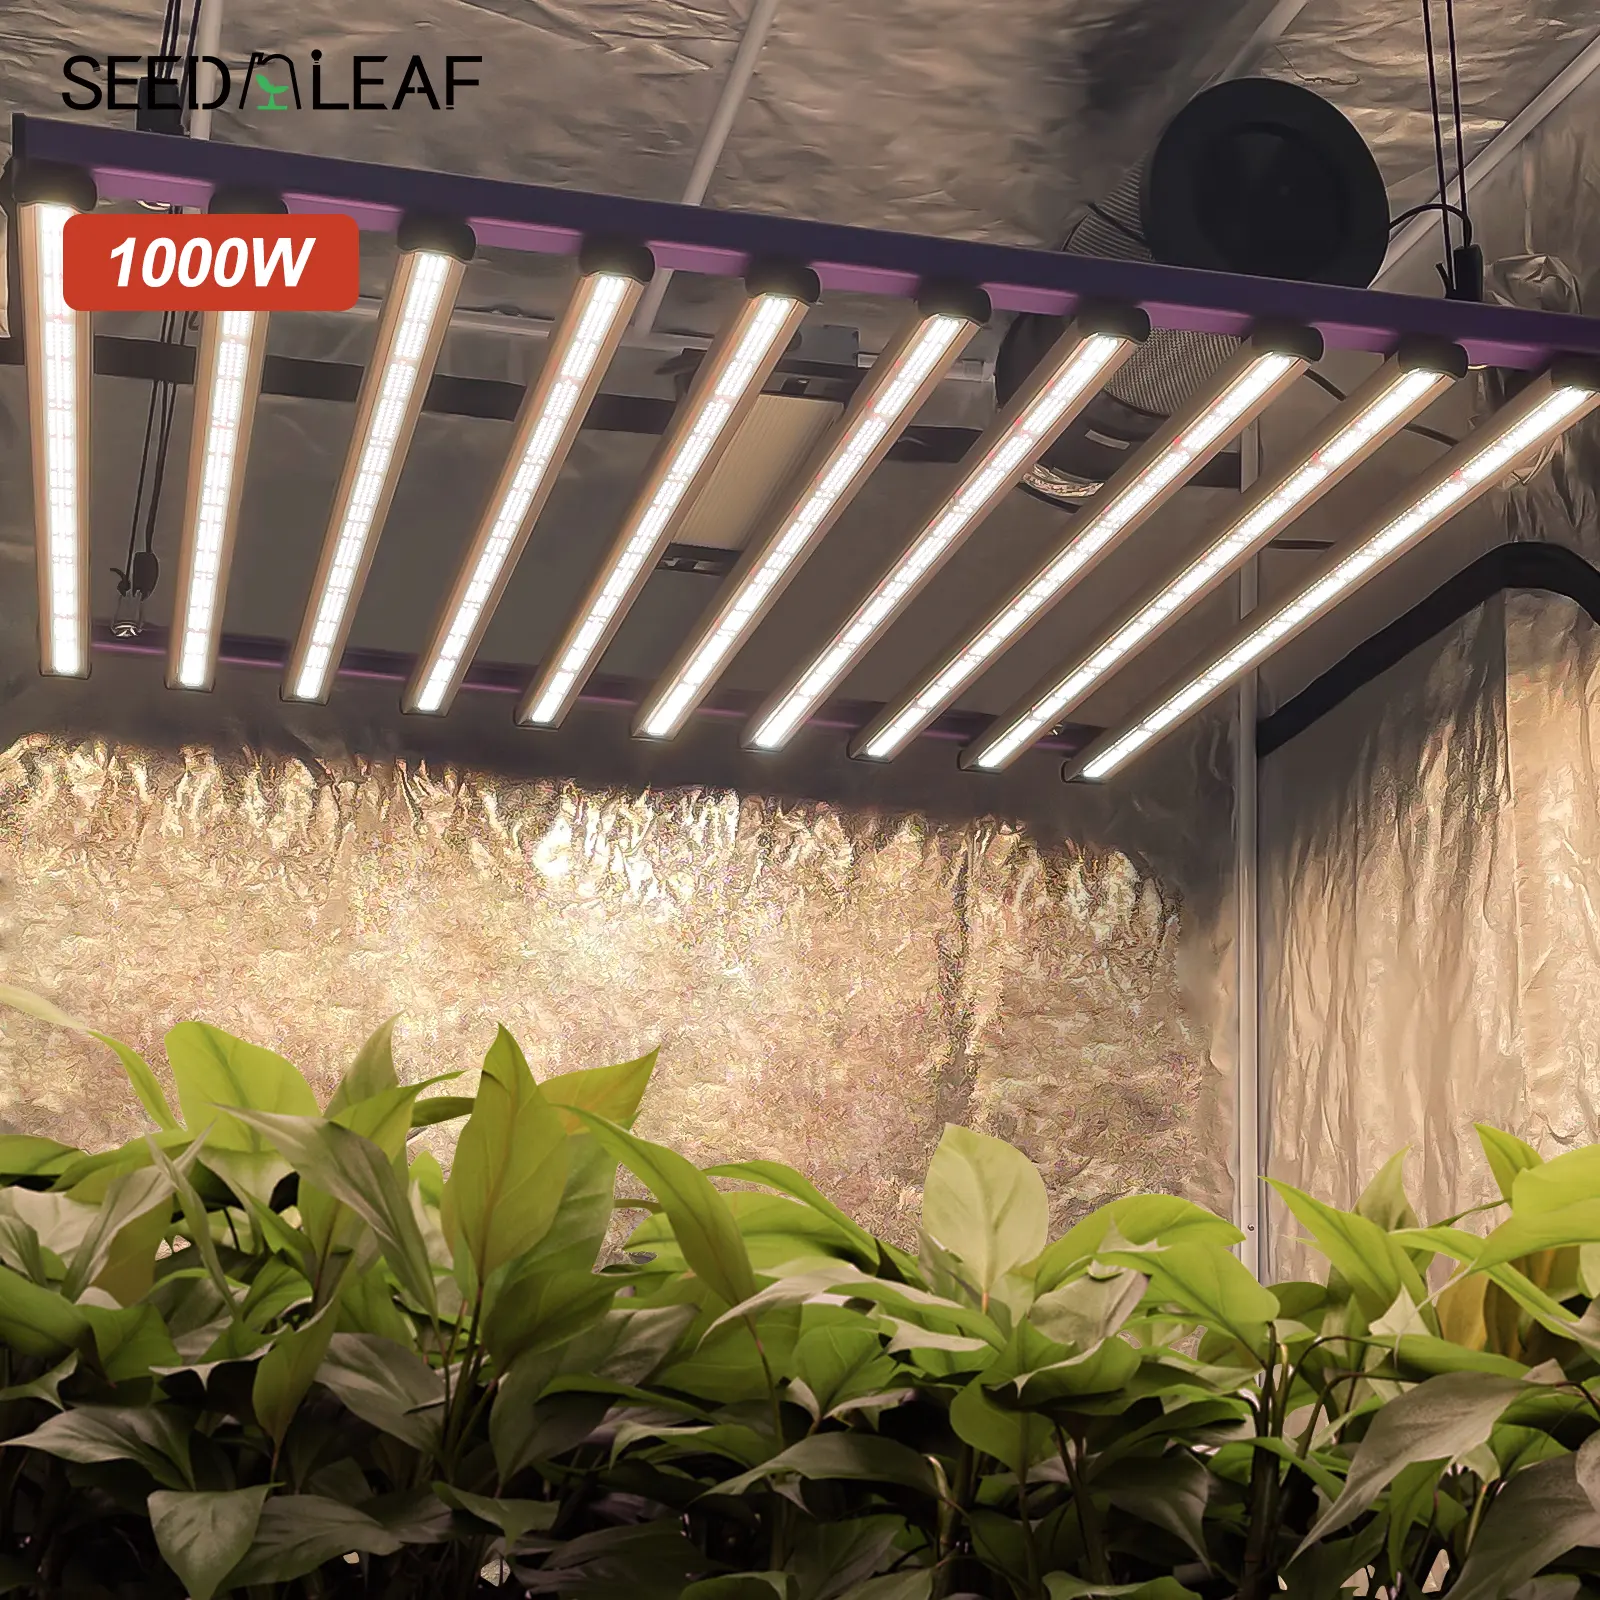 Invernadero 1000W Led Grow Light Bar Planta de interior Hierba médica Agricultura vertical Venta al por mayor Full Spectrum Led Plant Grow Light